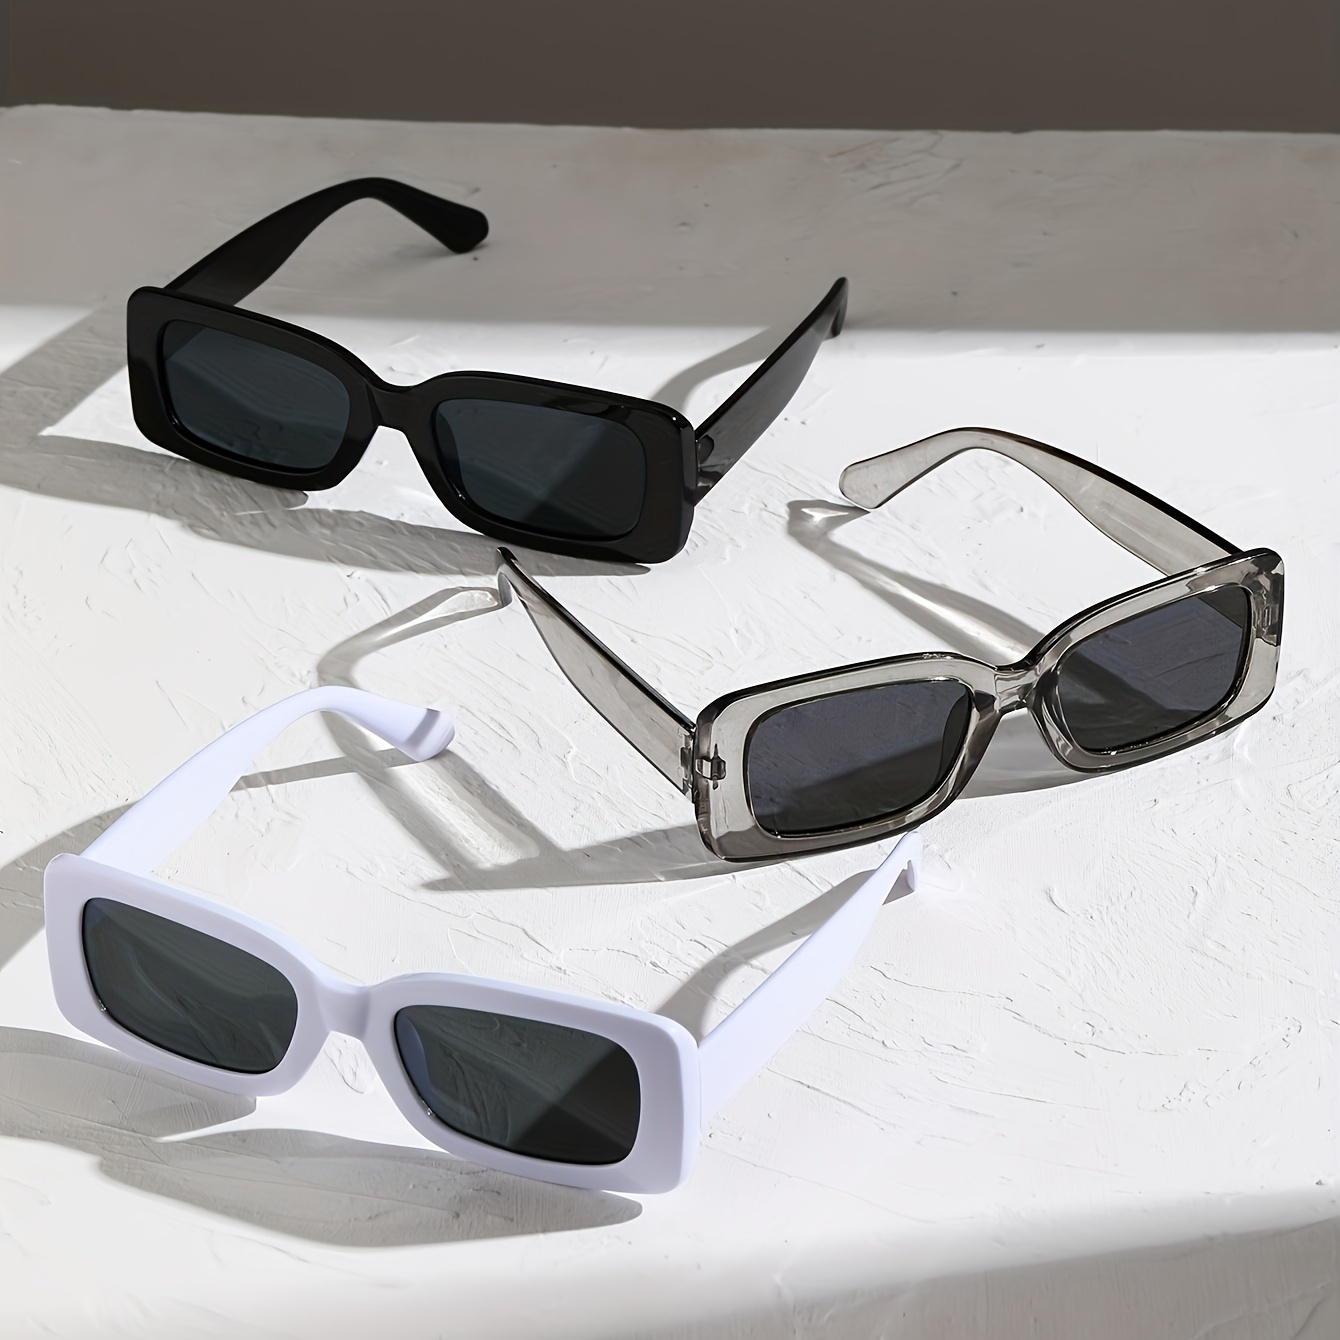 

3pcs Y2k Rectangle Fashion Eyeglasses Anti Glare Glasses For Travel, Beach, Party, Club - Unisex